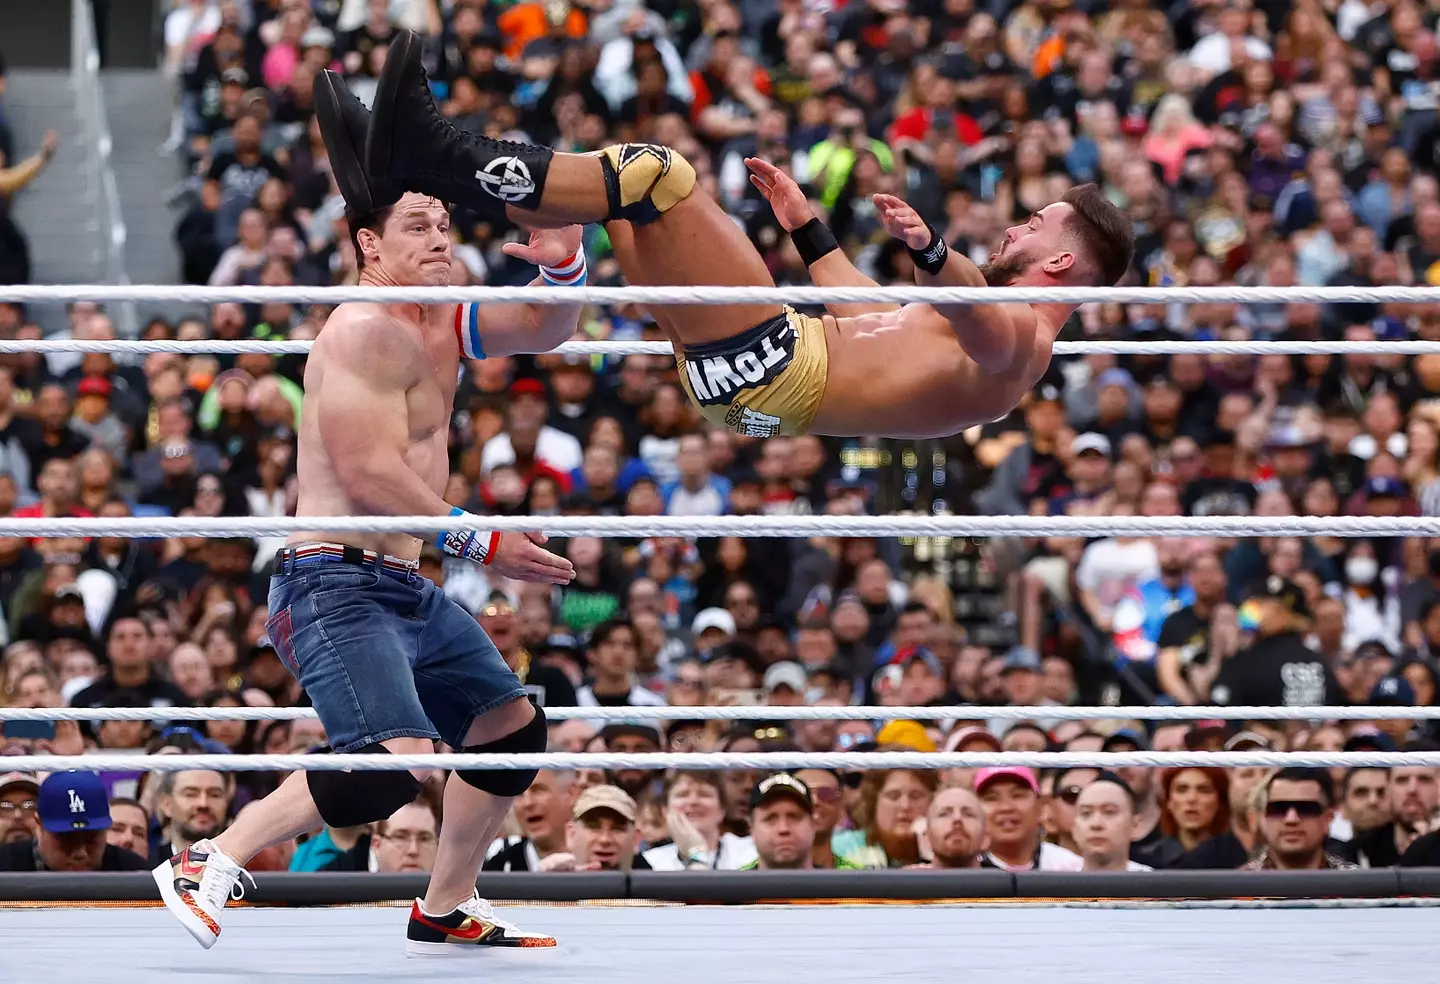 John Cena addressed the notion of him retiring from wrestling.